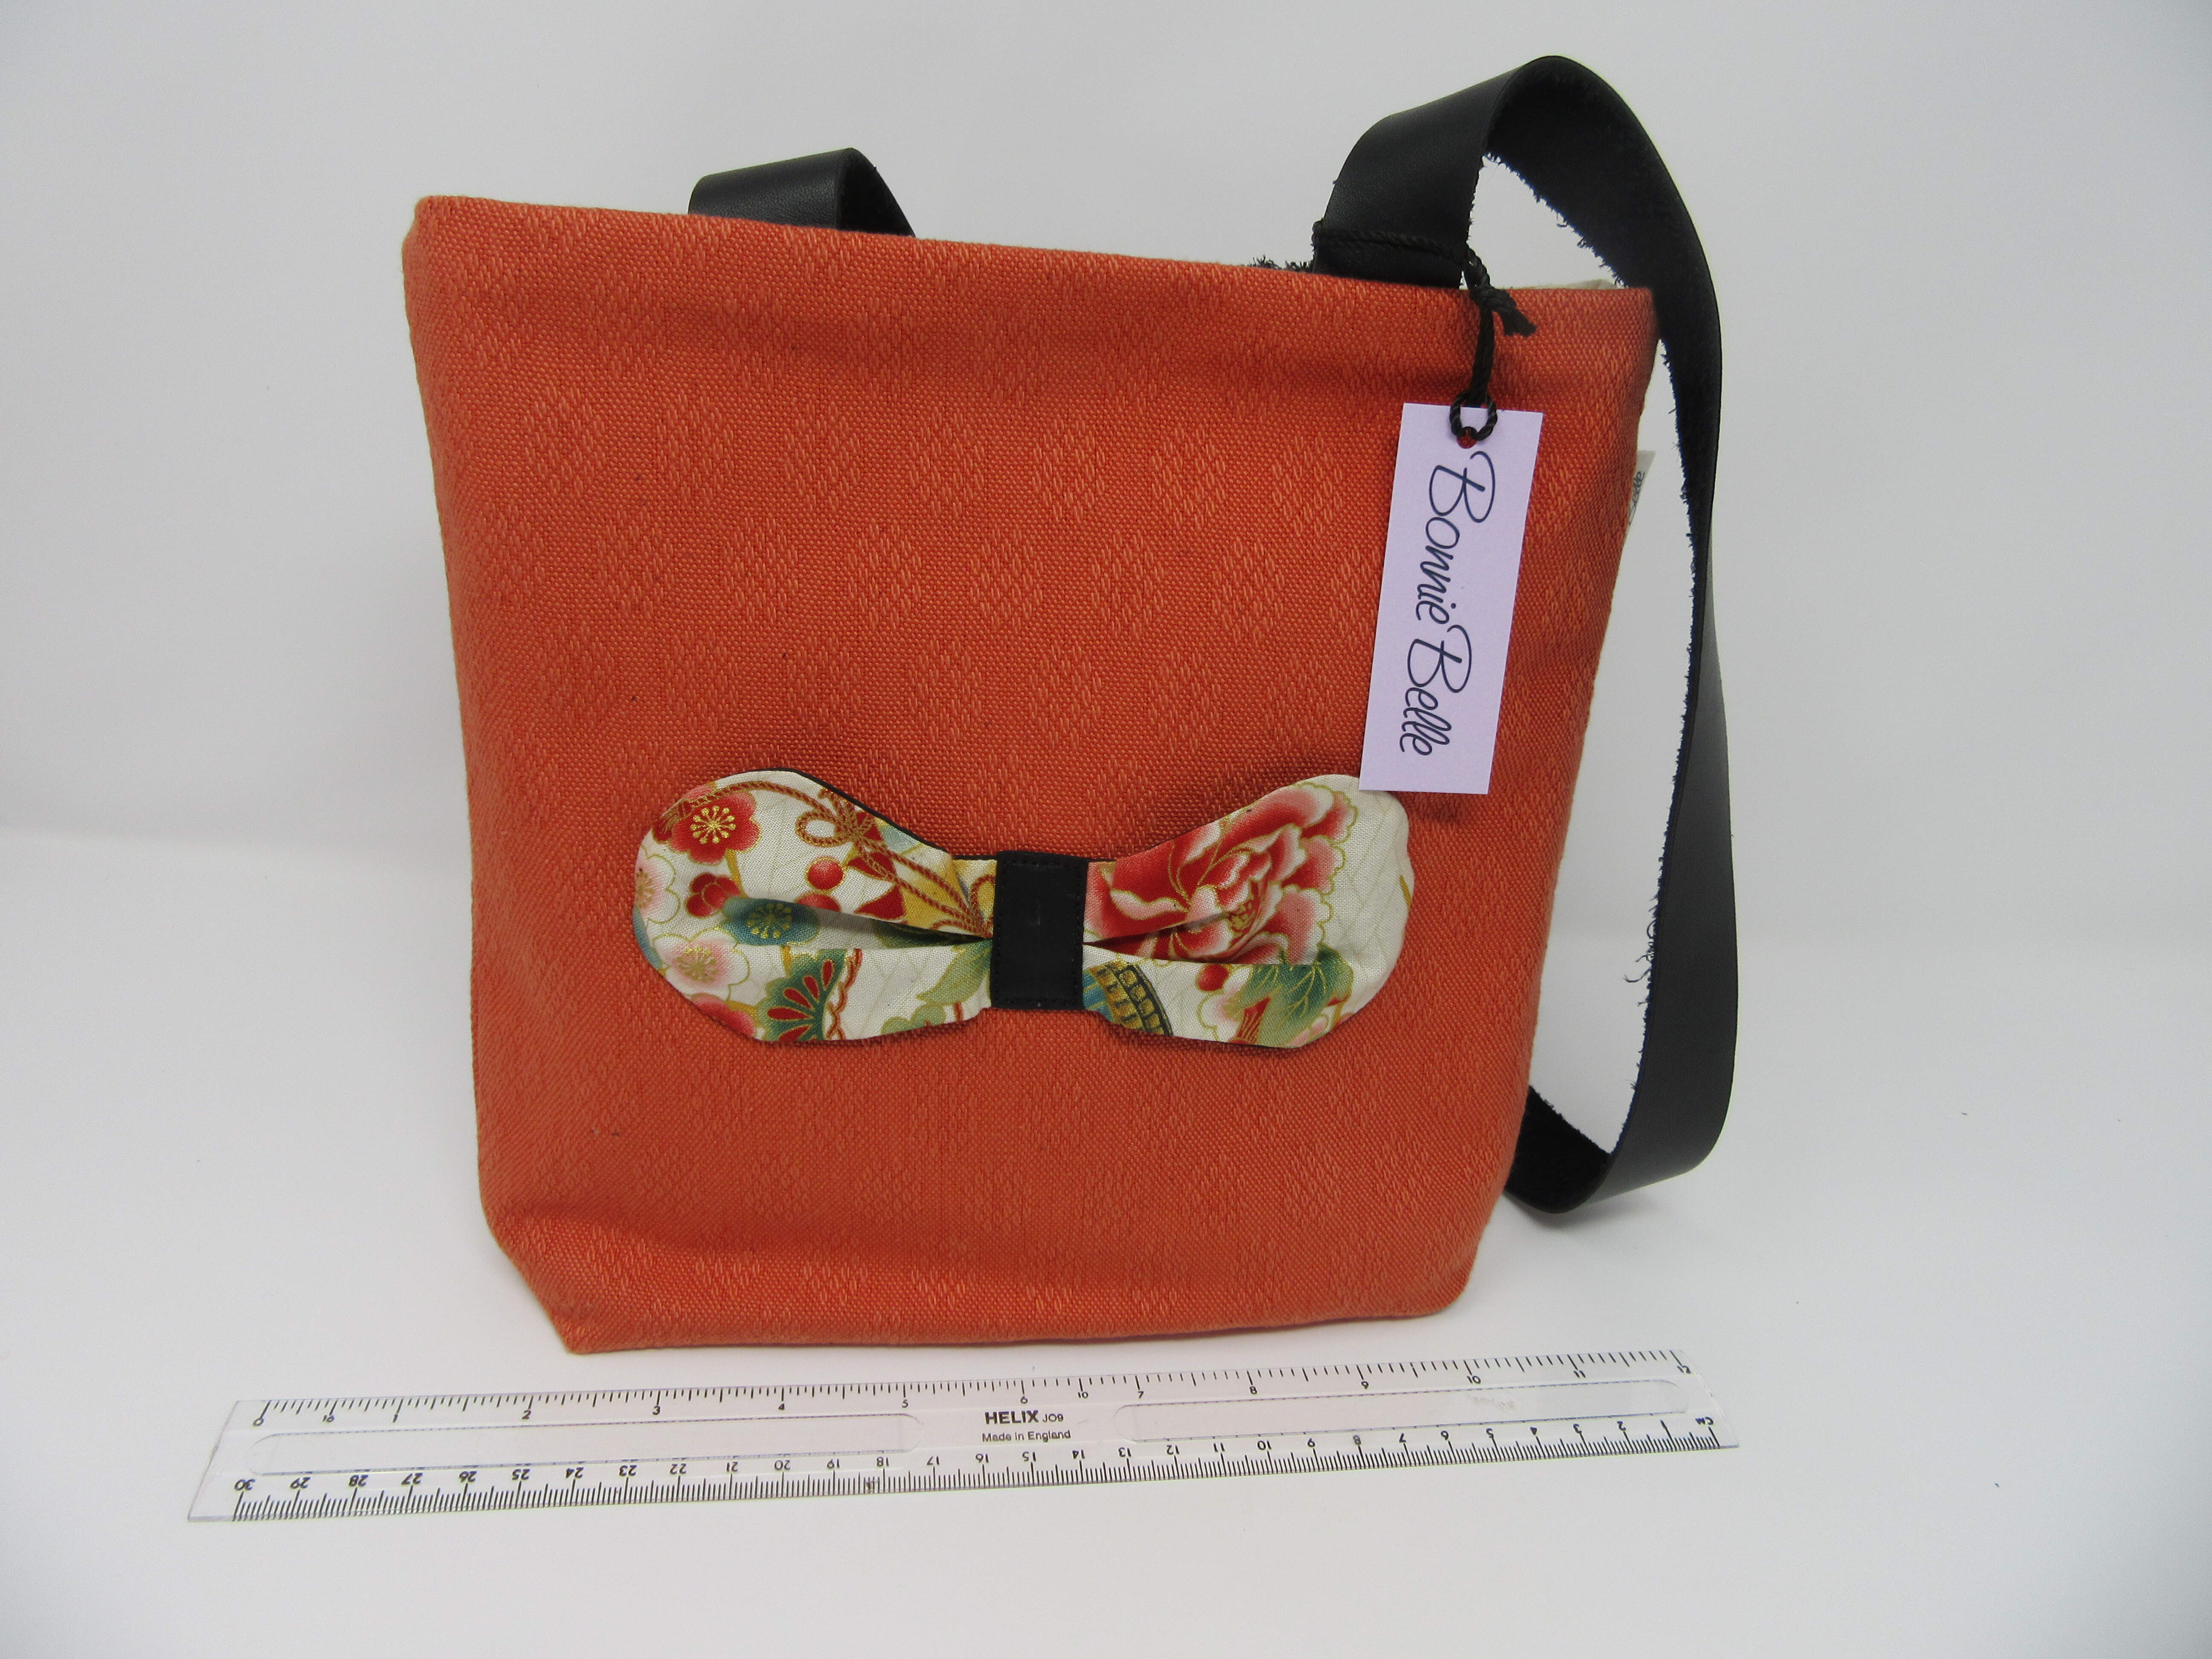 Orange linen bag with bow